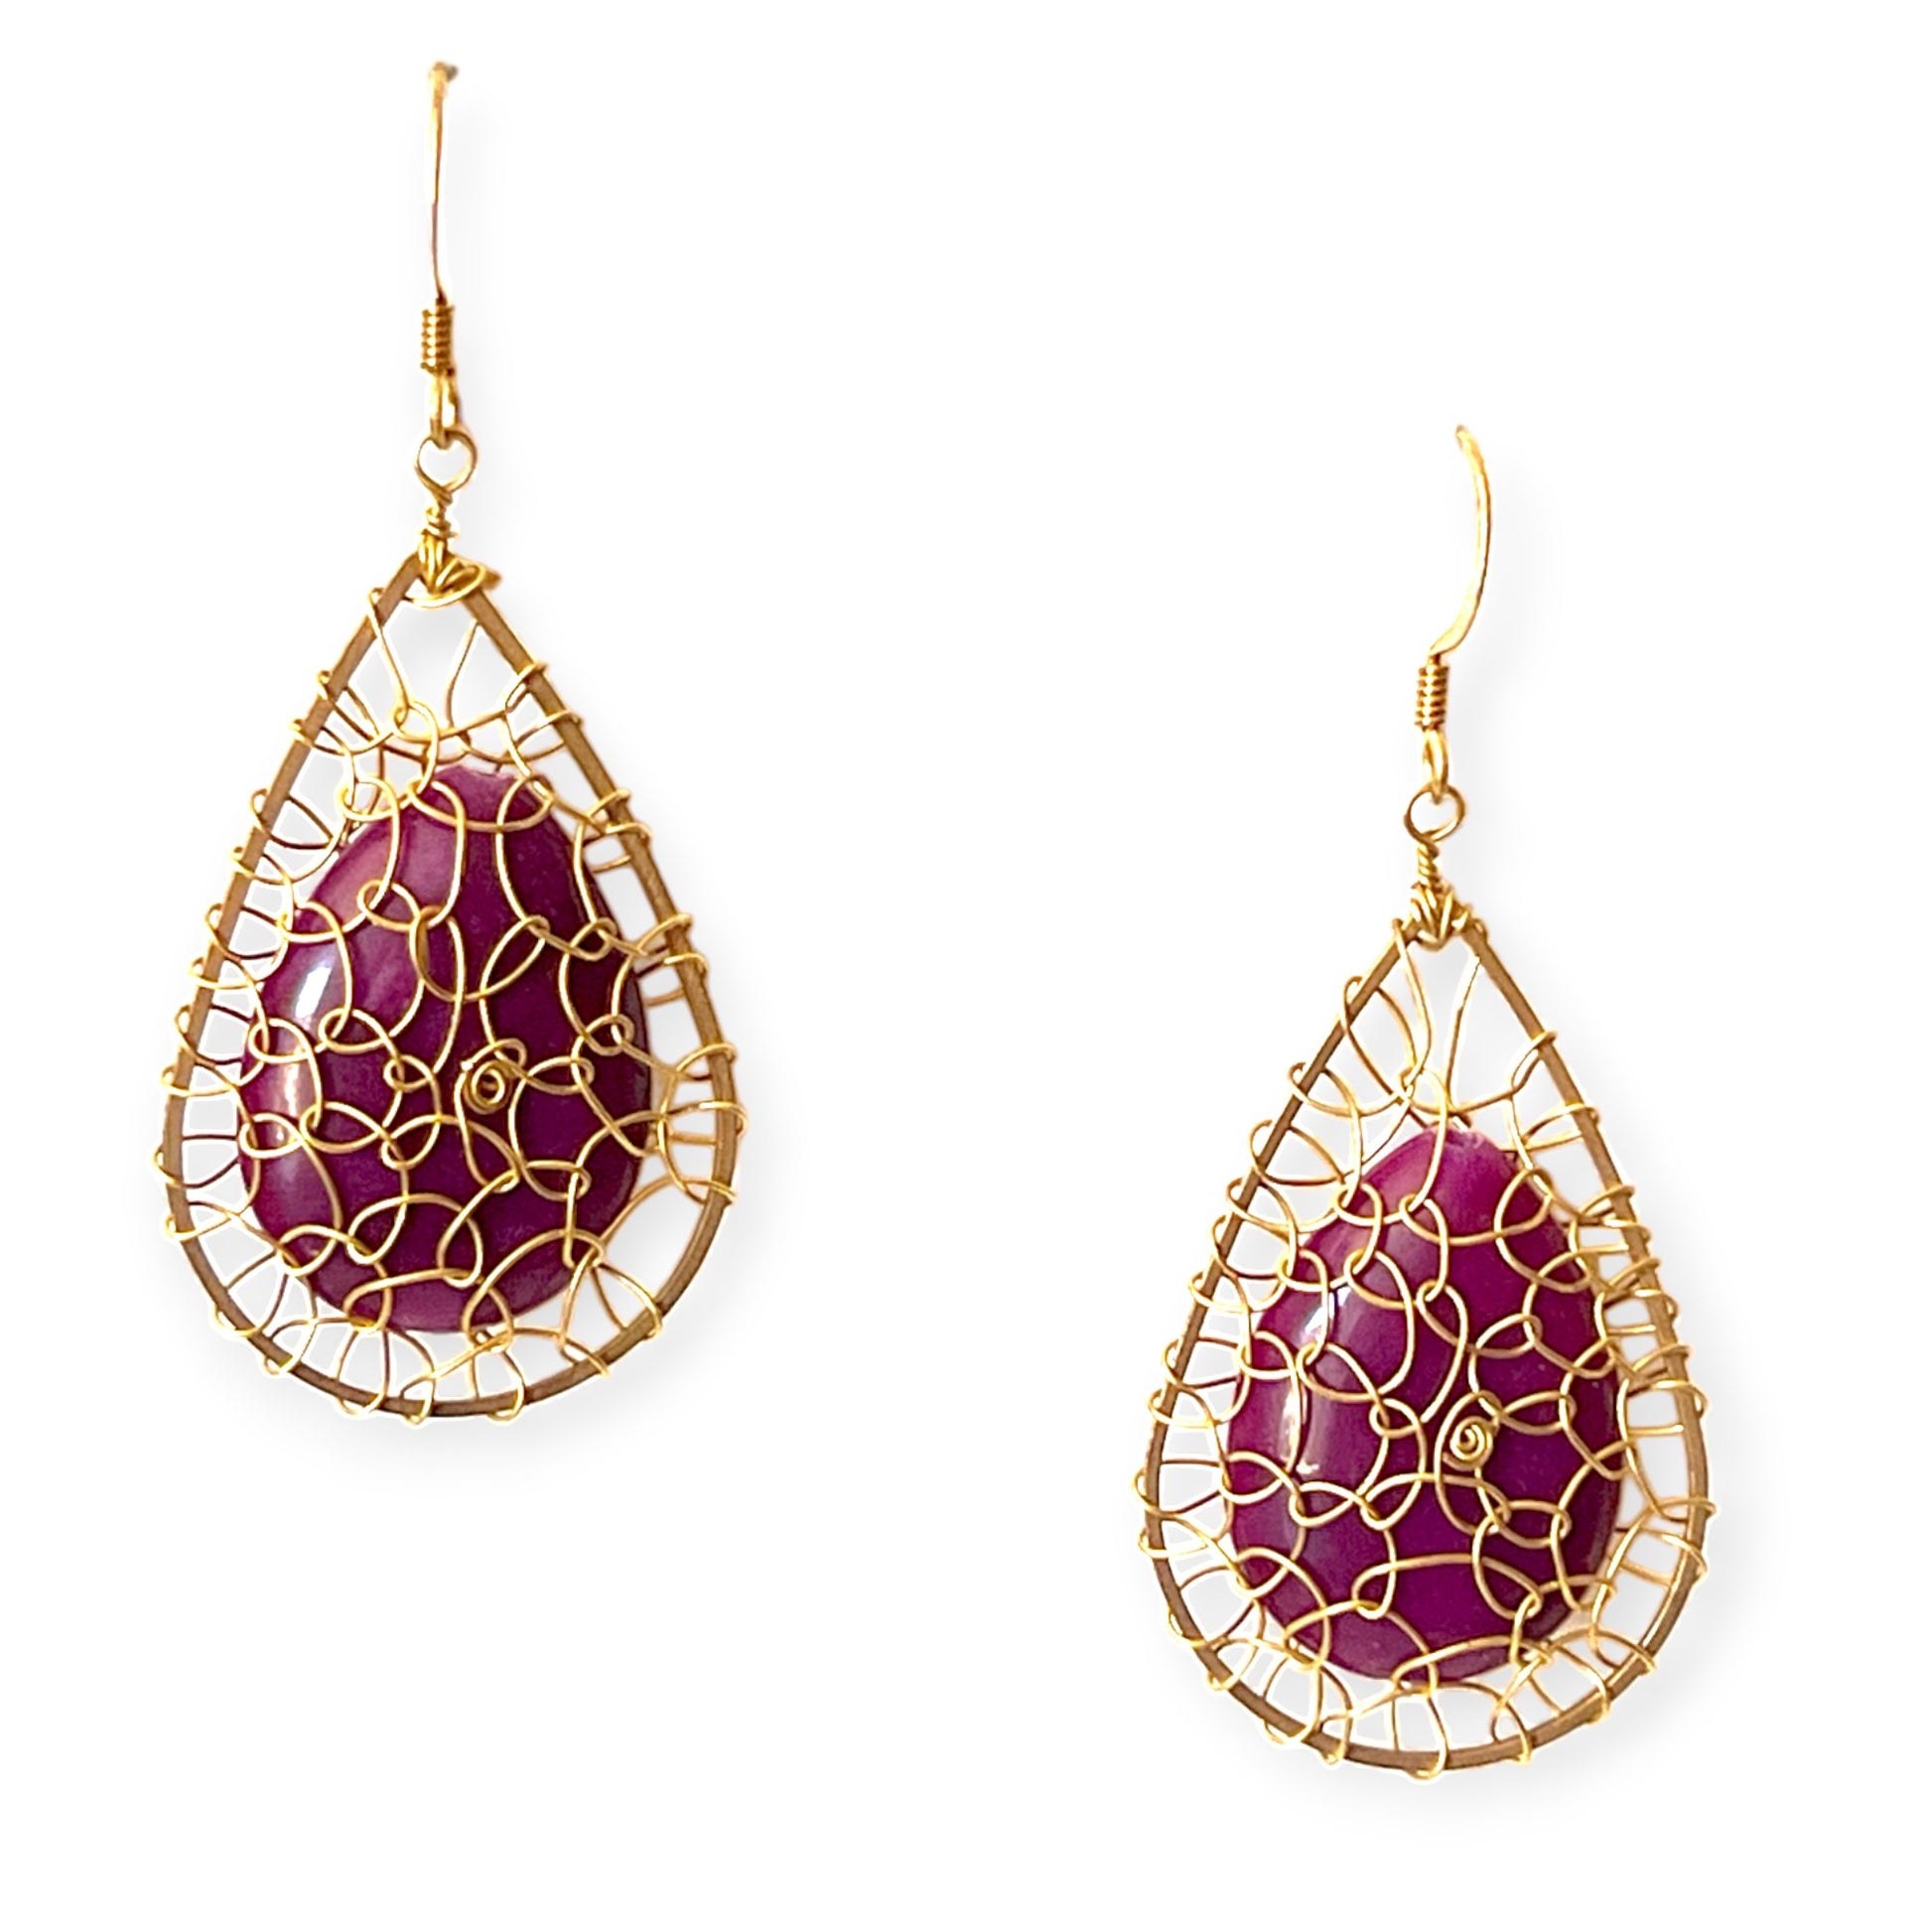 Colorful netted stone statement earrings - Sundara Joon